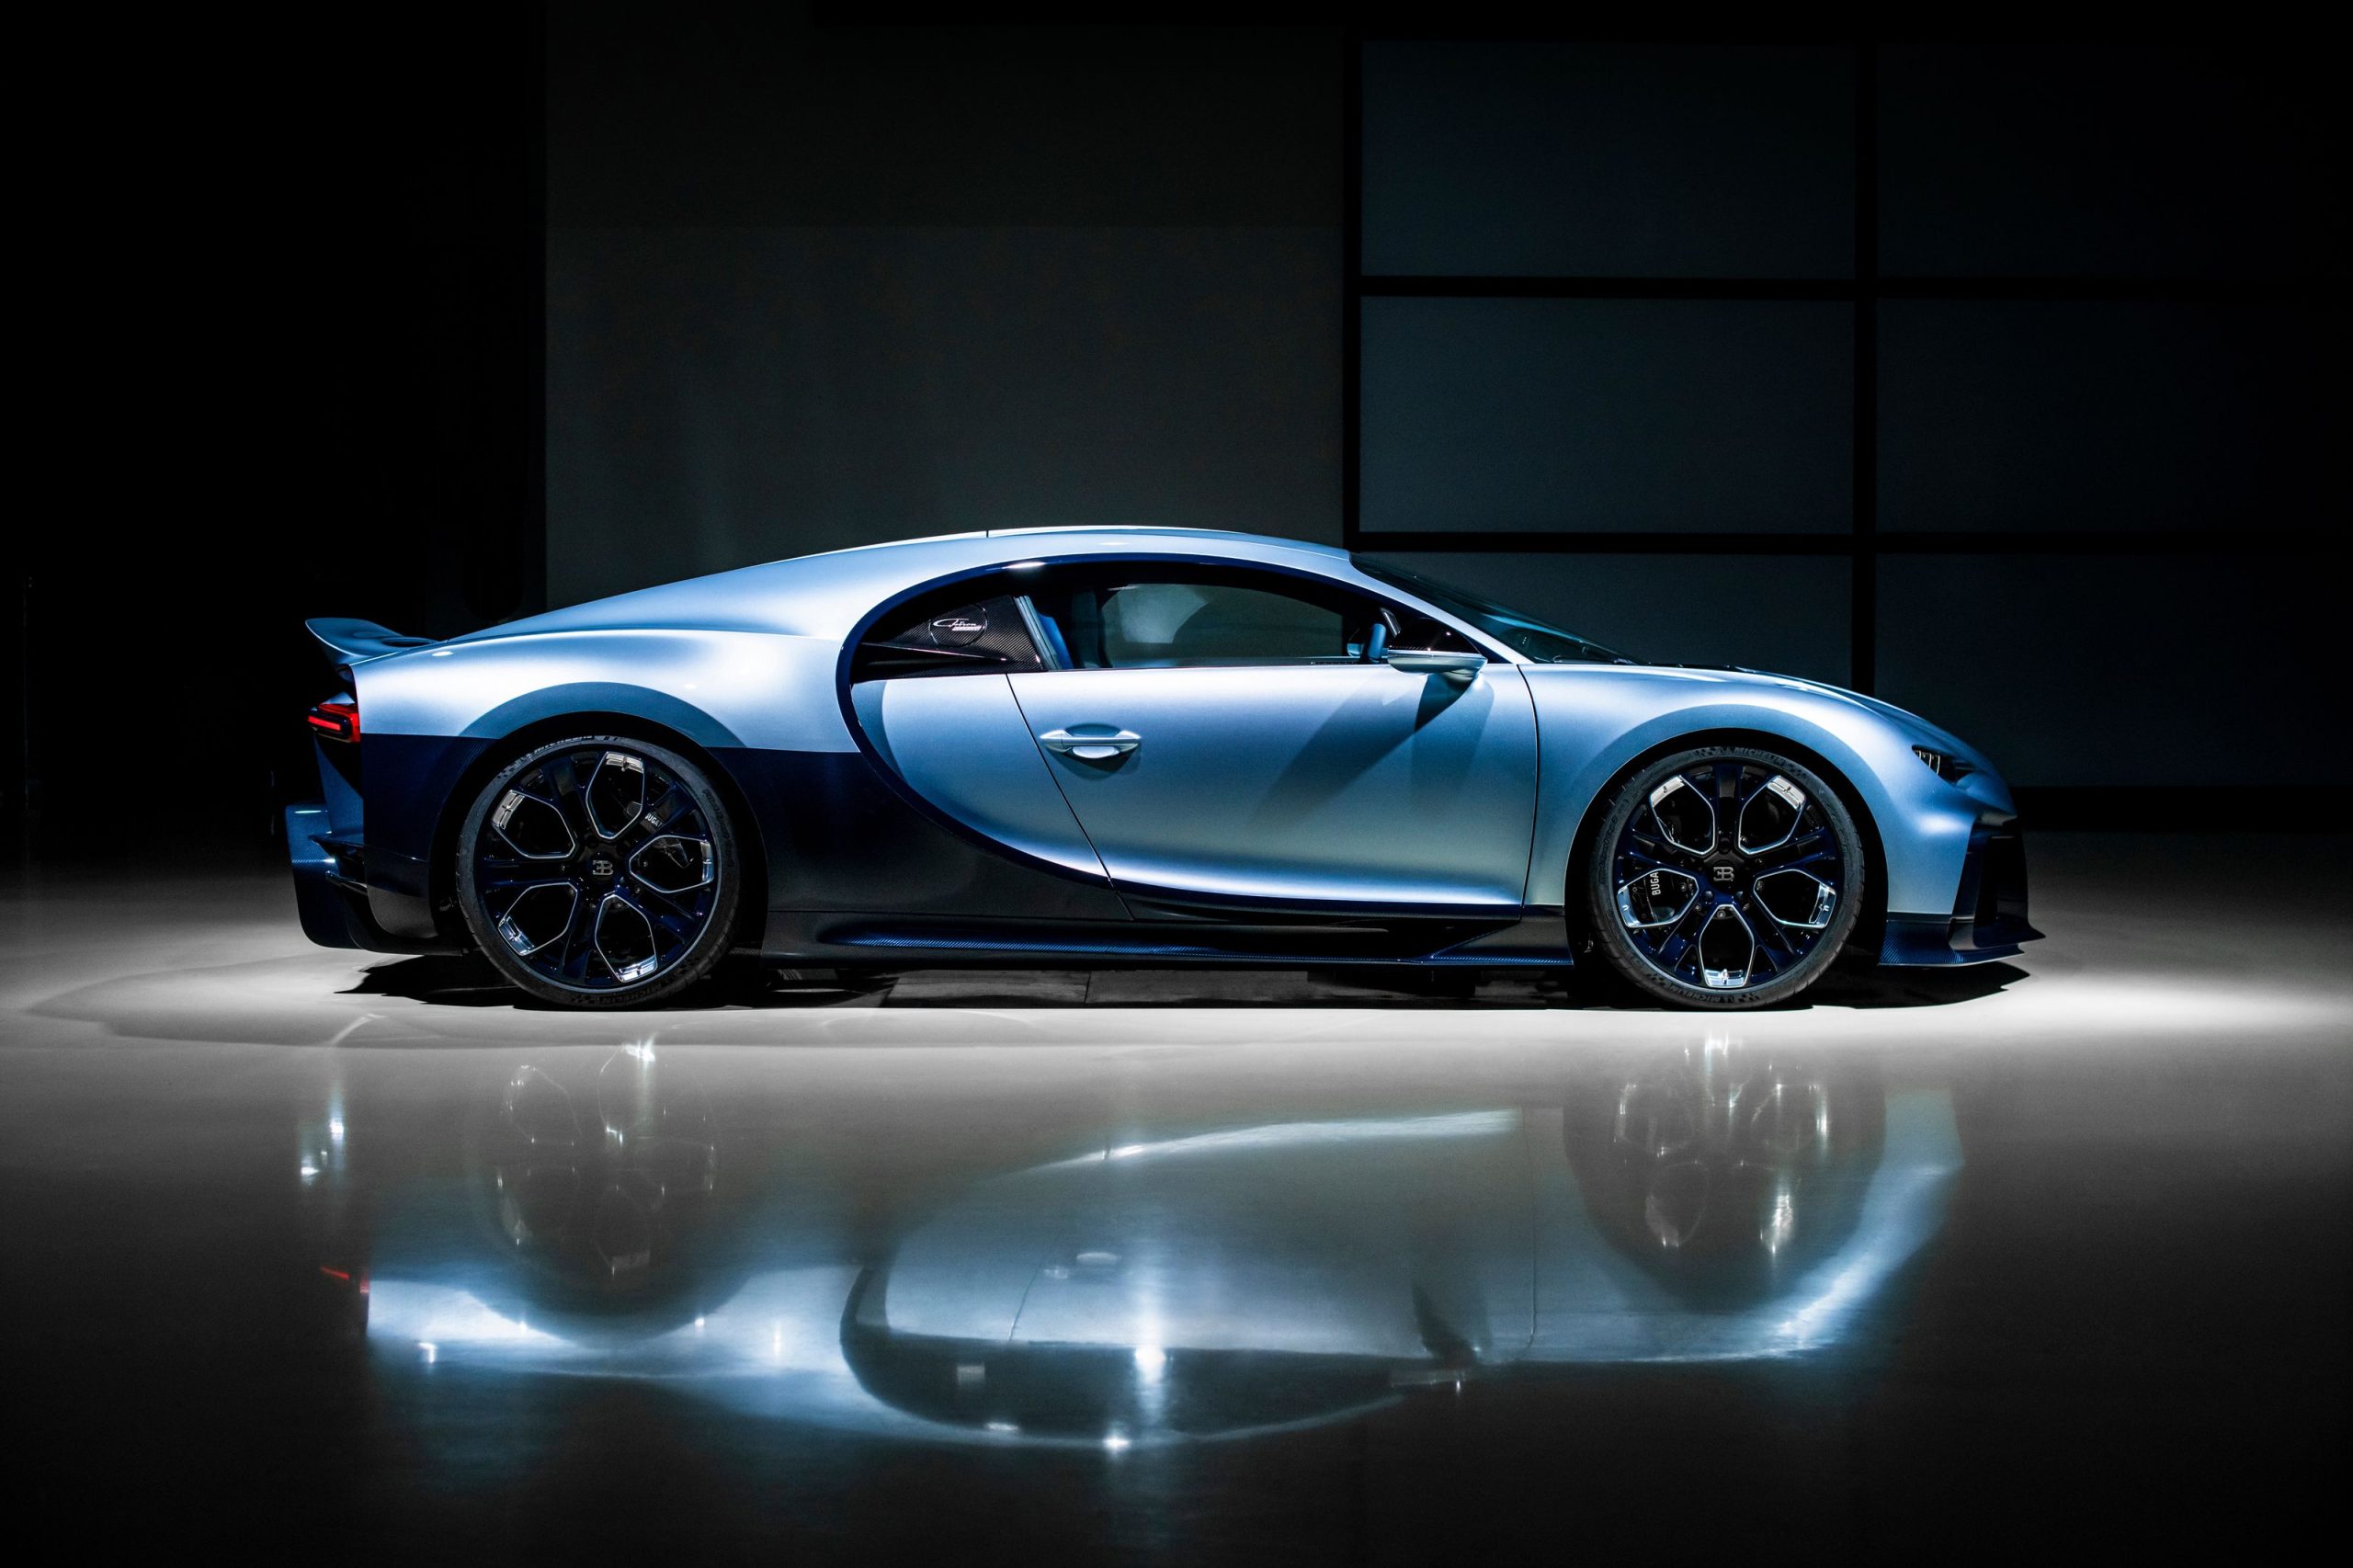 Mirrored image showing the side profile of the Bugatti Chiron Profilée.